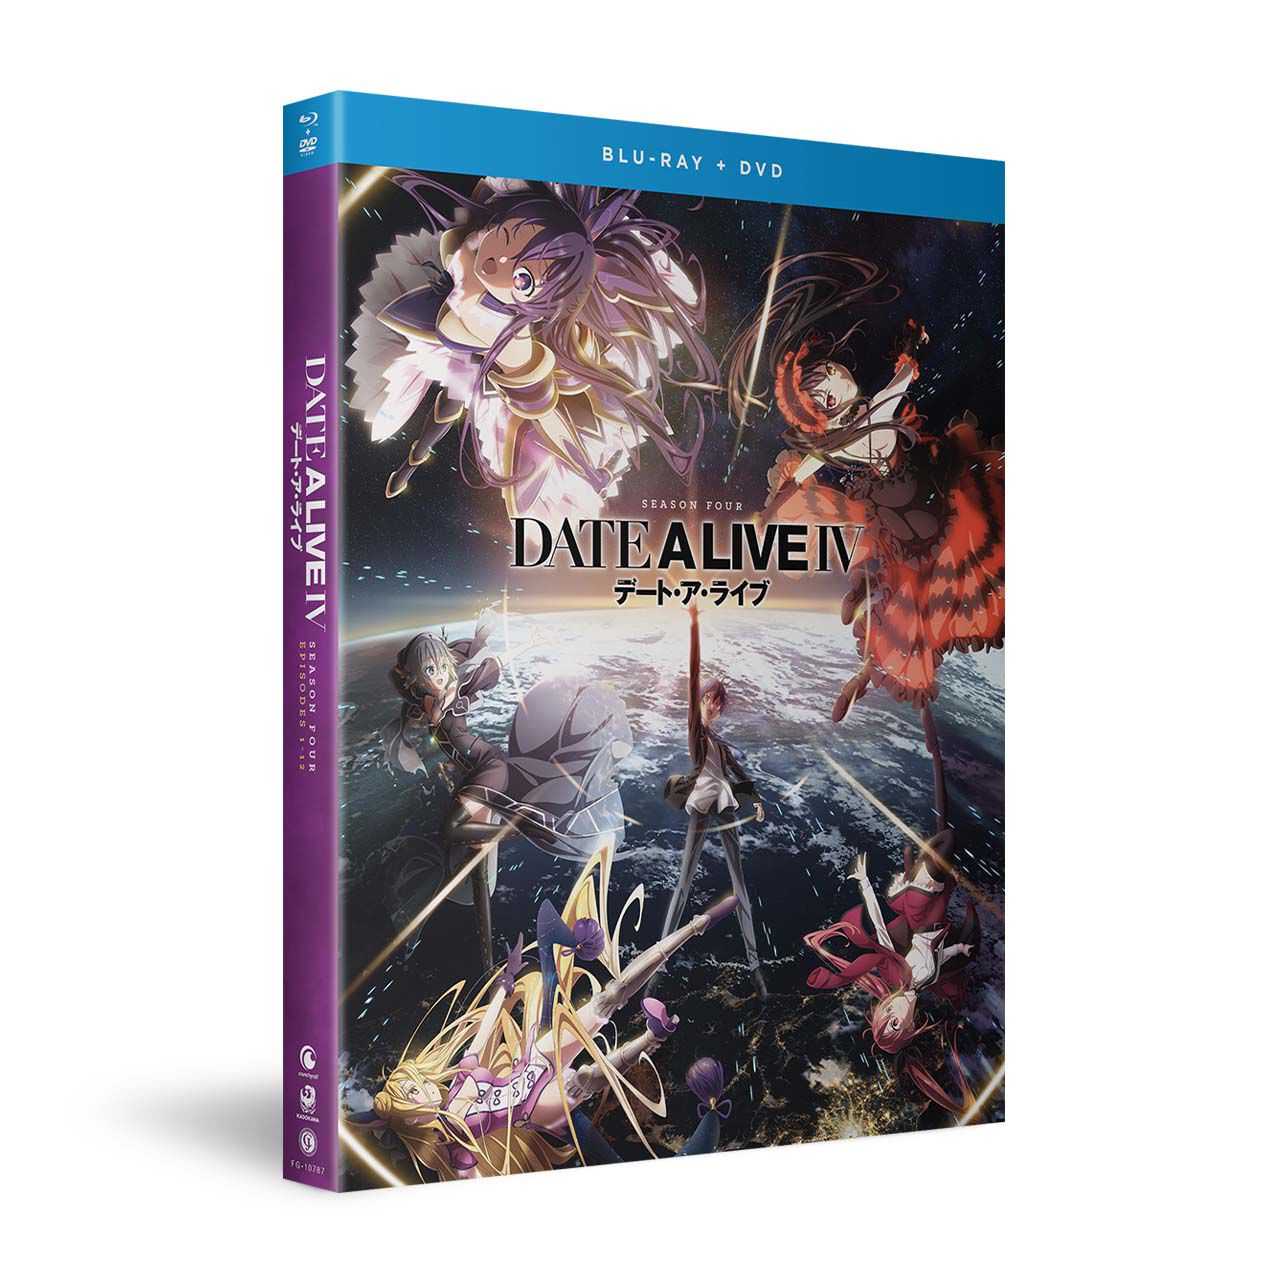 Date A Live IV - Season 4 - Blu-ray + DVD | Crunchyroll Store